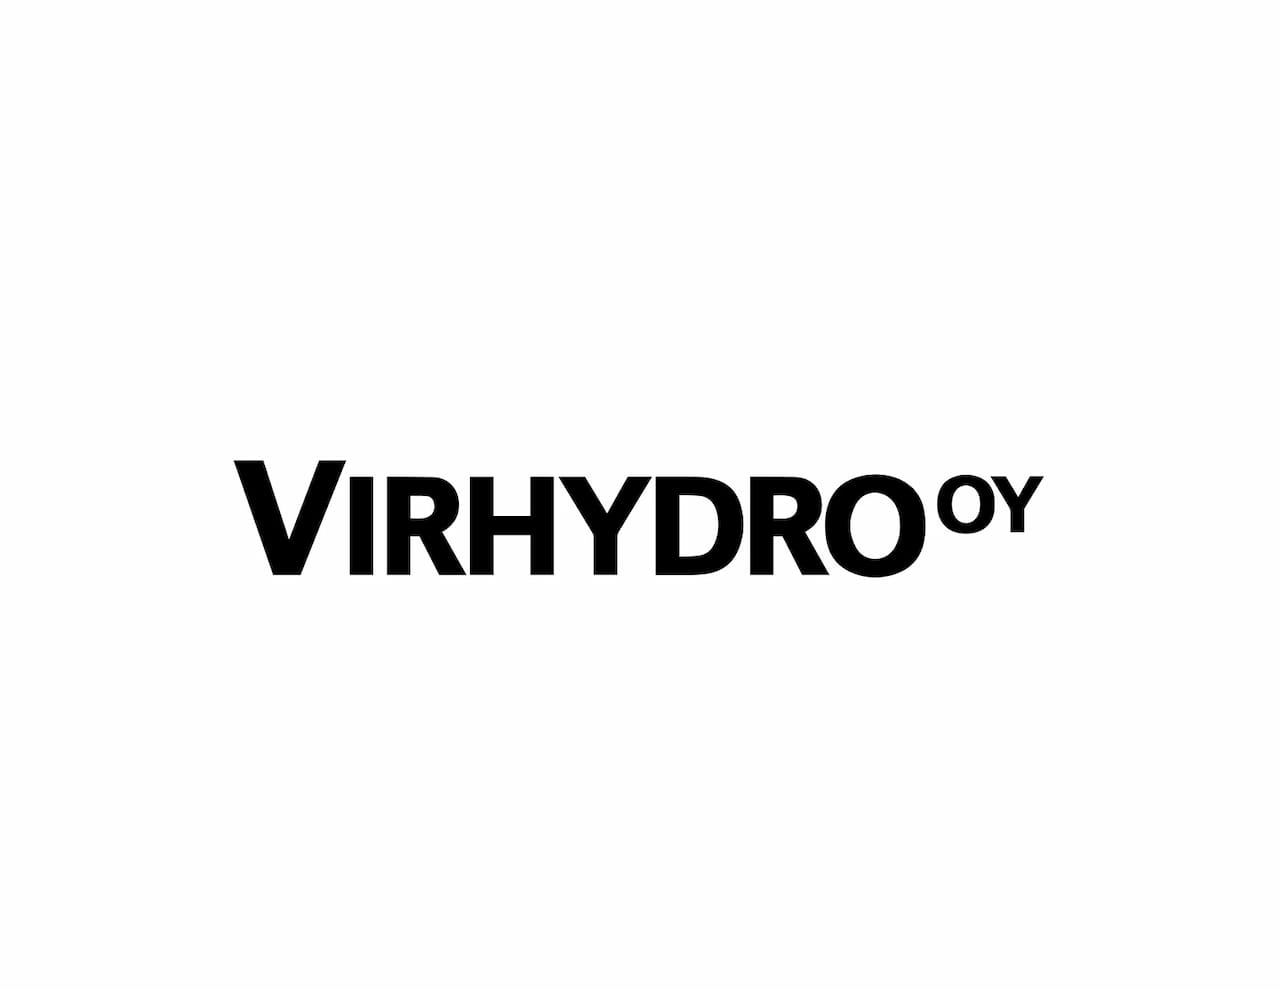 Virhydro Oy